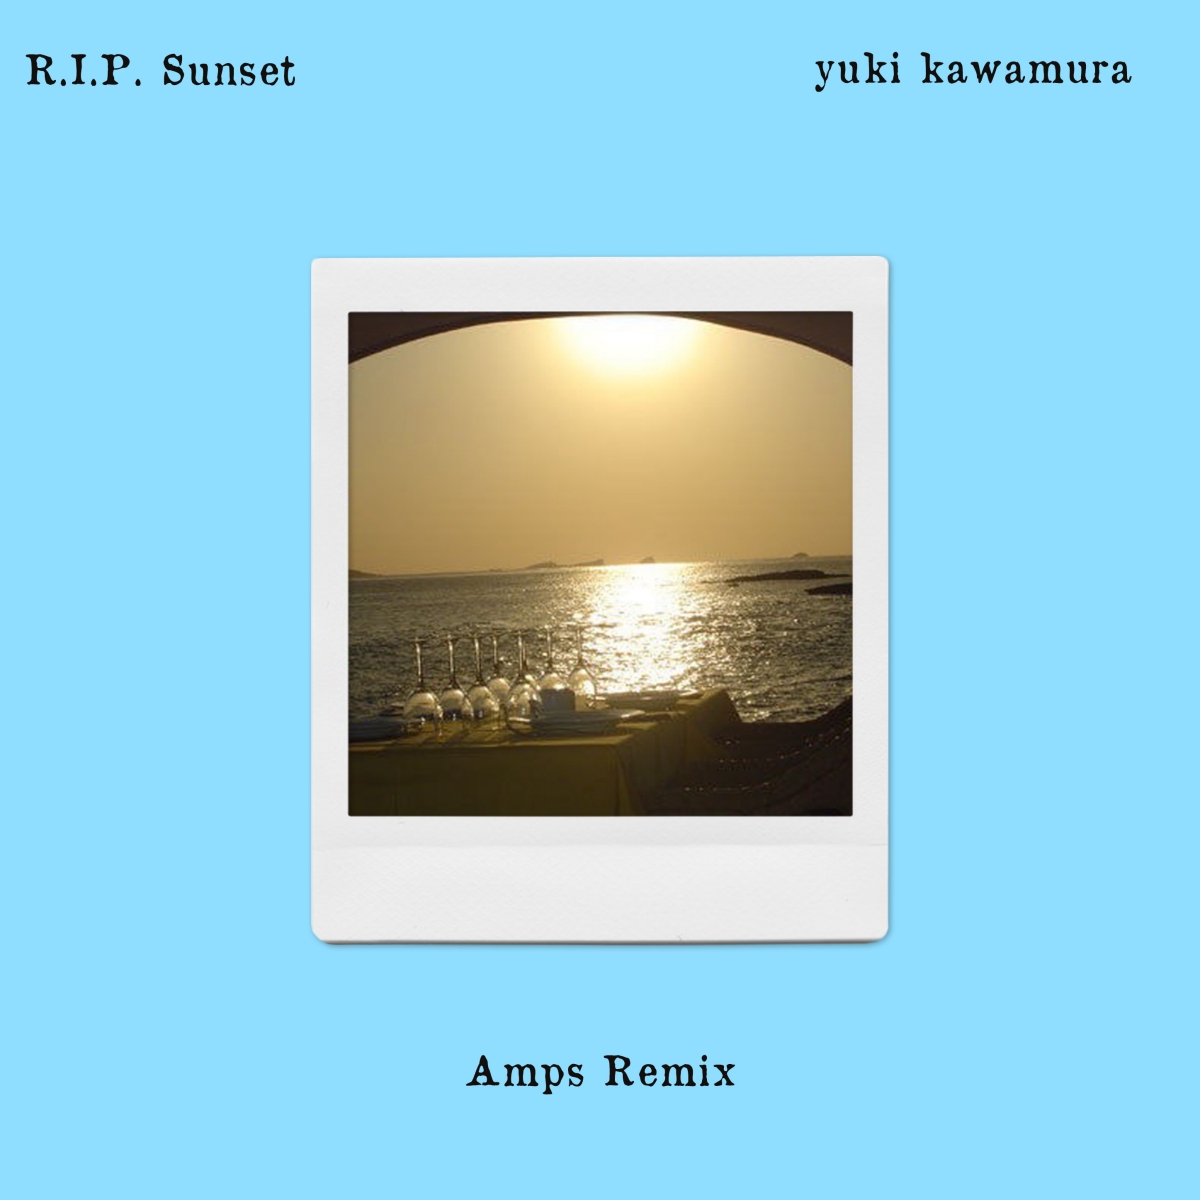 R.I.P. Sunset Amps Remix